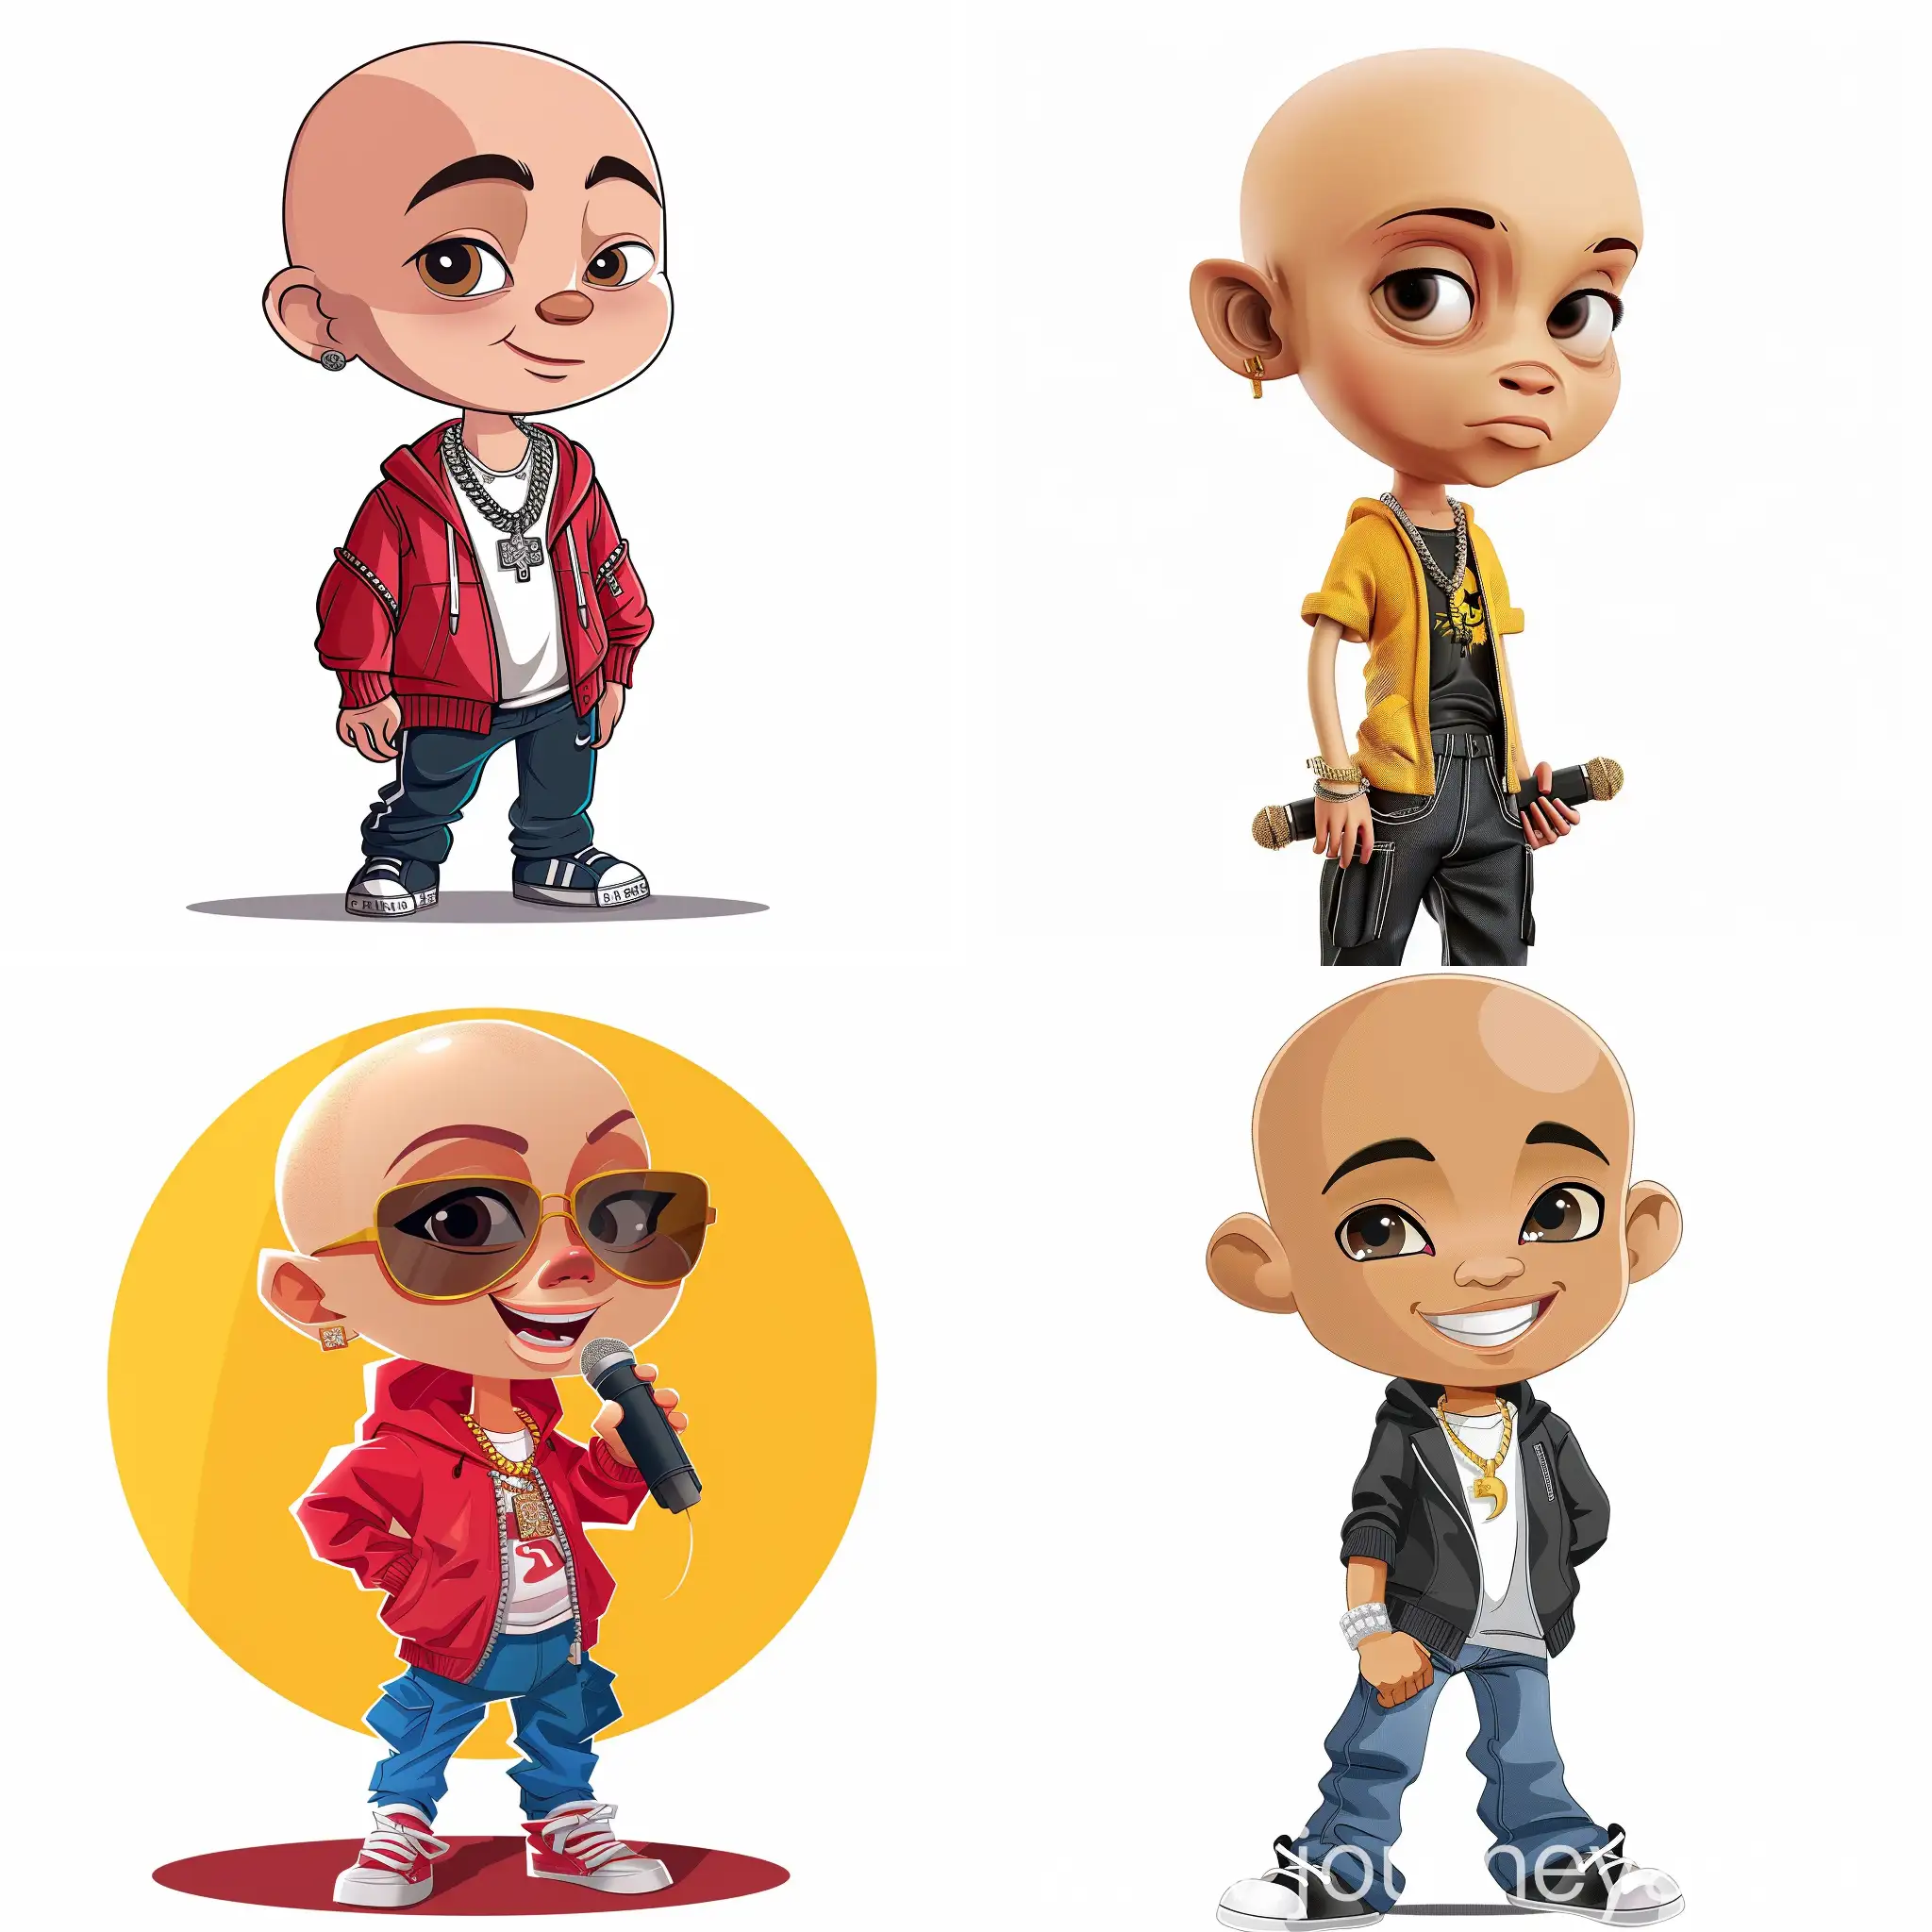 Bald-Rapper-Boy-Cartoon-Character-Performing-in-Vibrant-Attire